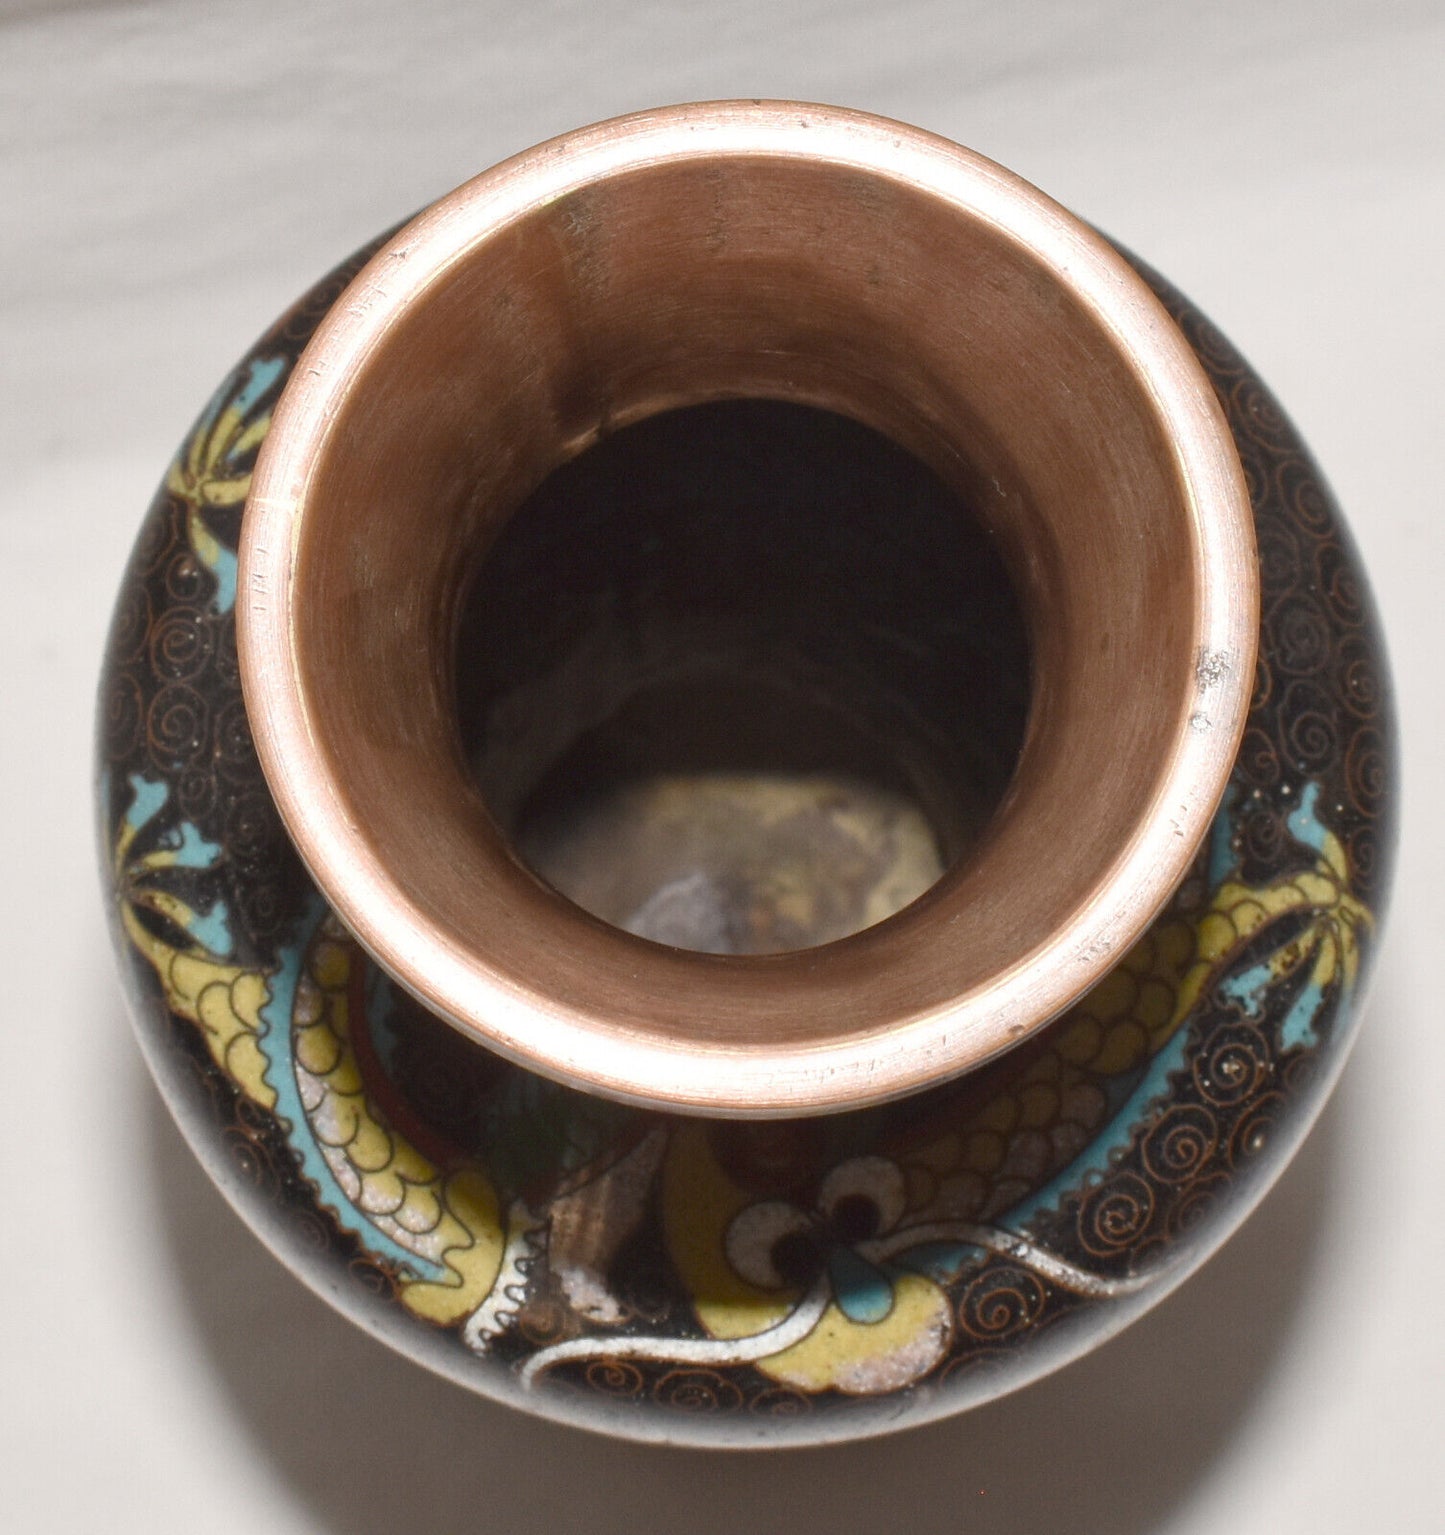 Vintage Chinese Cloisonne Dragon Vase on Stand Hand Painted Brass Enamel Vase